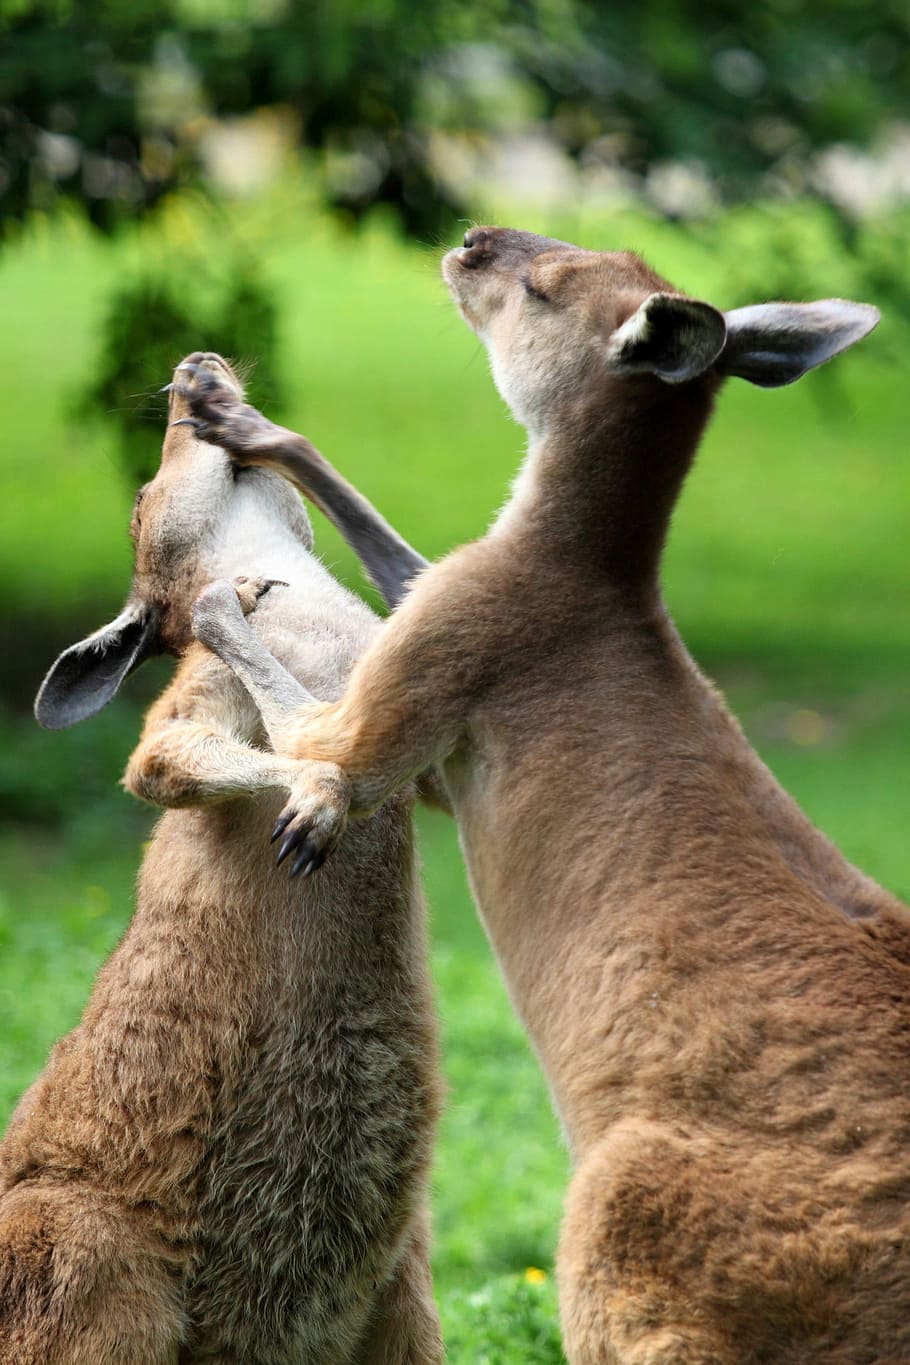 lucha de canguros, canguros, lucha, animales, Australia, fotos, canguro, mamíferos, naturaleza, dominio público